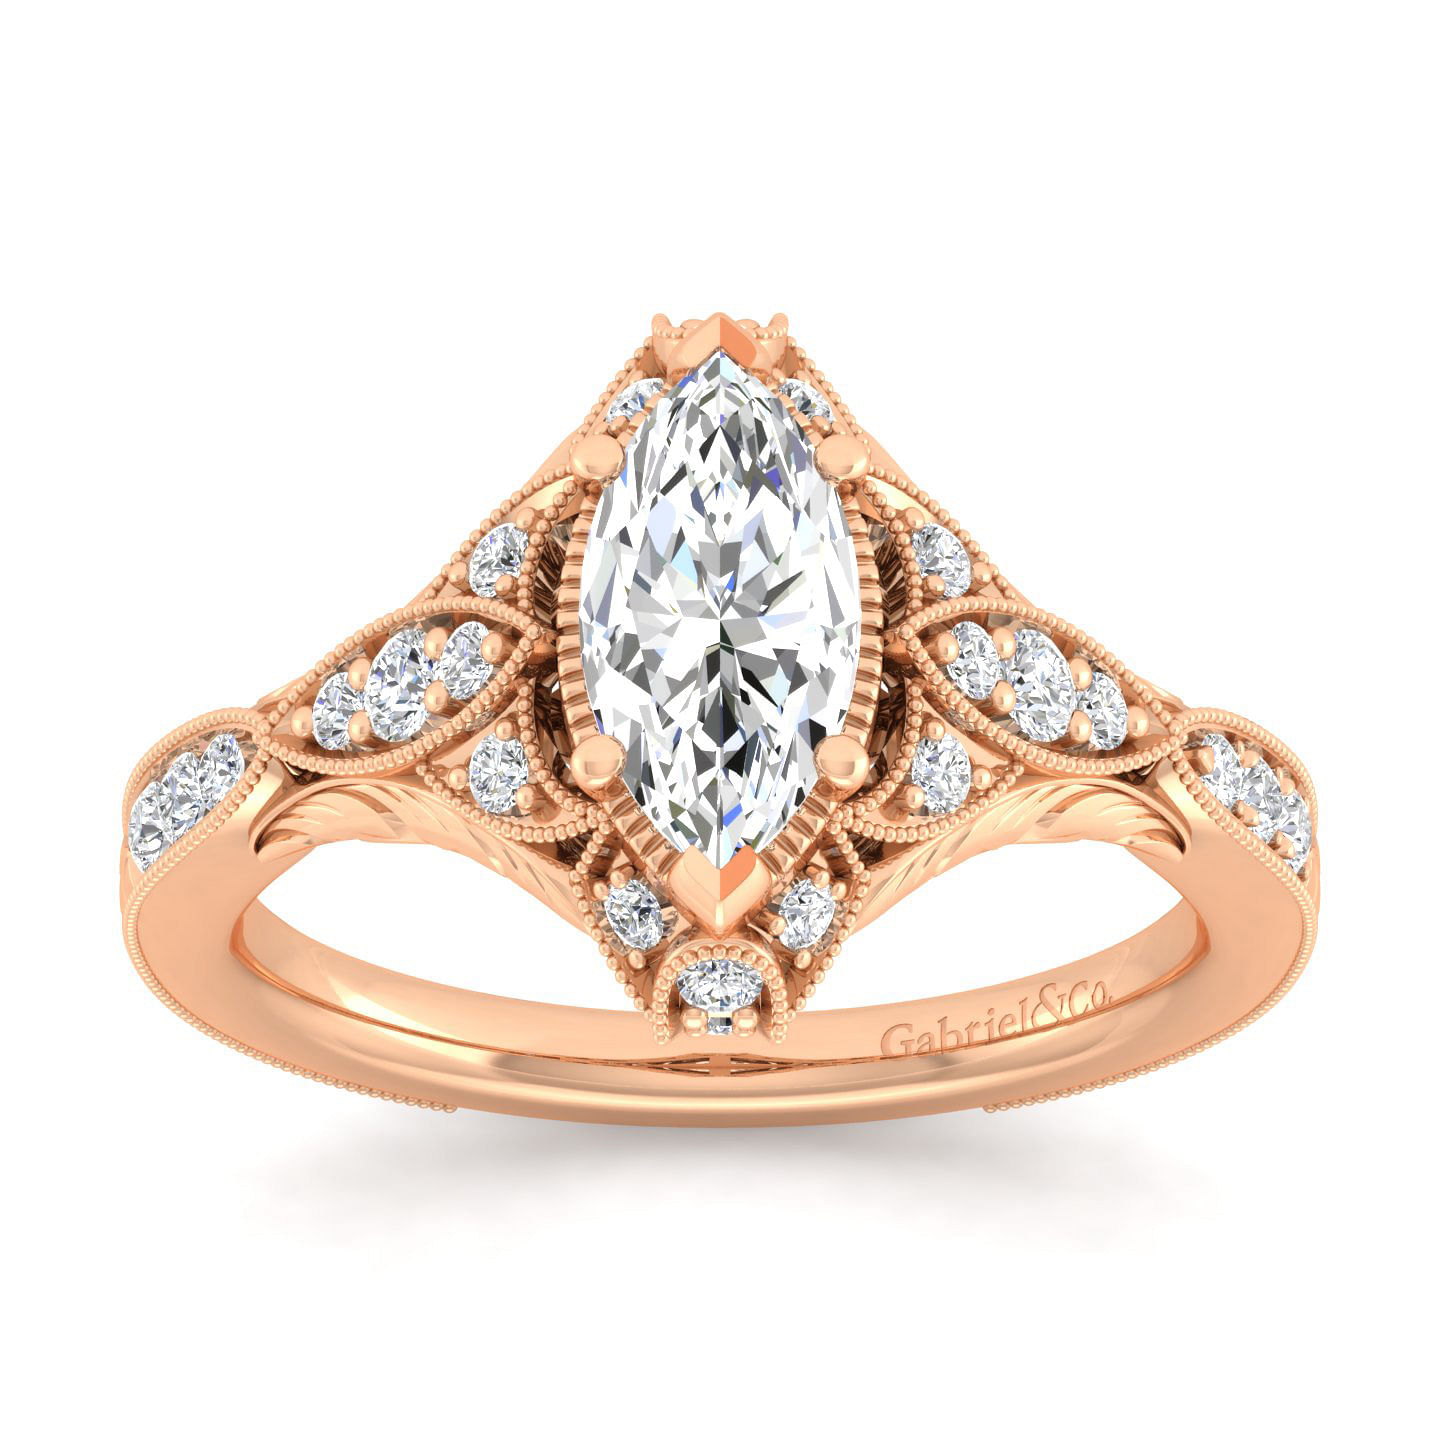 Unique 14K Rose Gold Vintage Inspired Marquise Shape Diamond Halo Engagement Ring